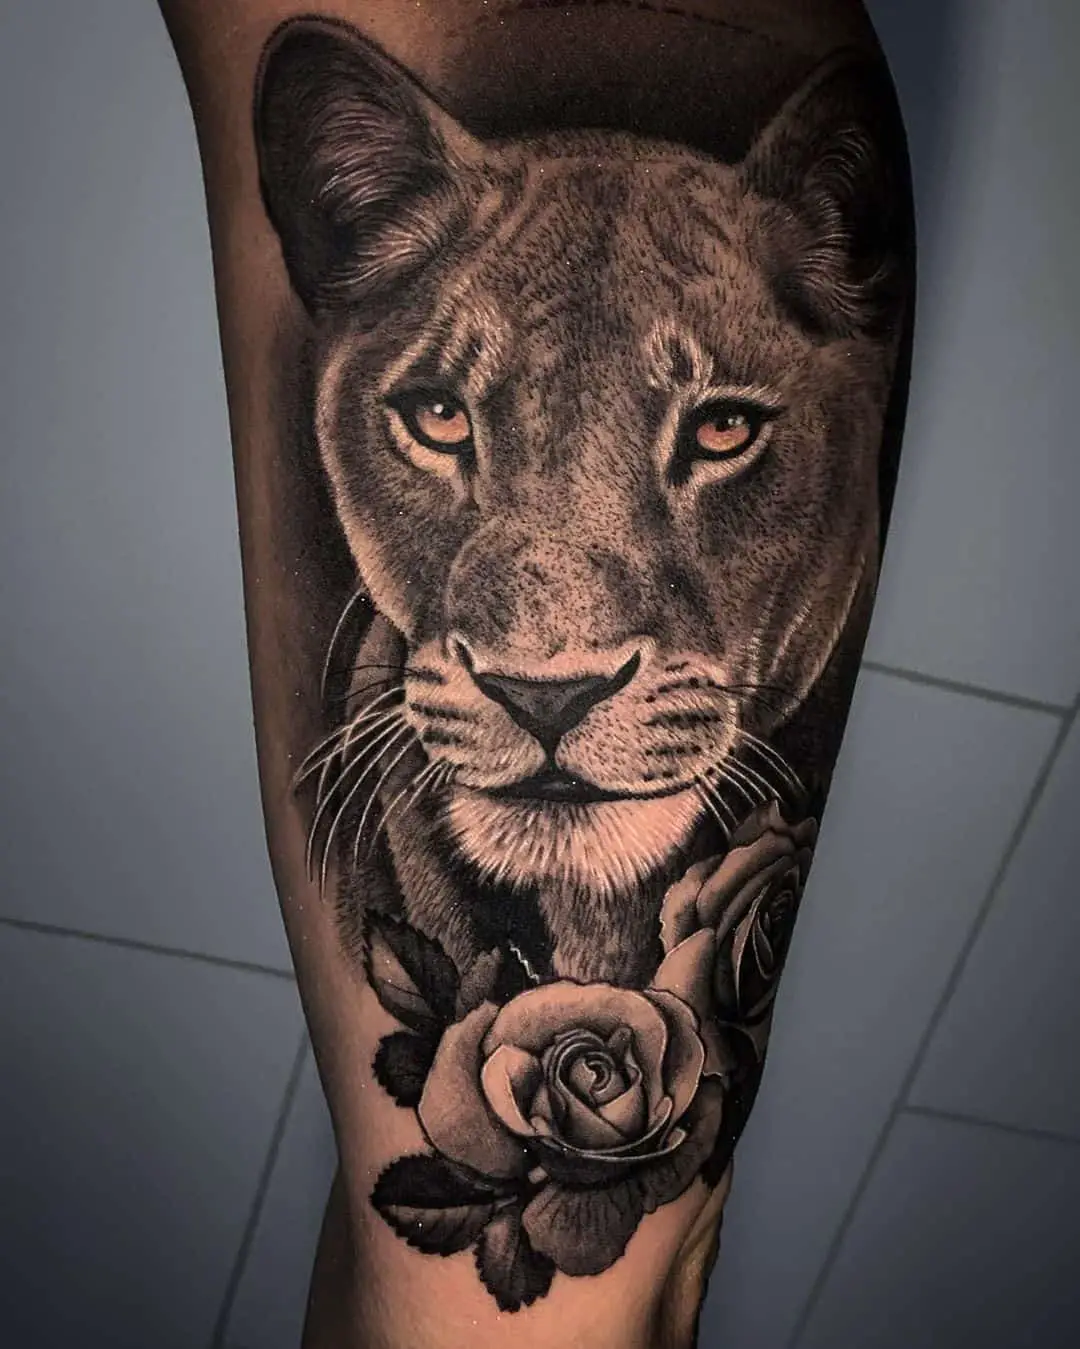 REalistic lioness tattoo by dani moreno garcia